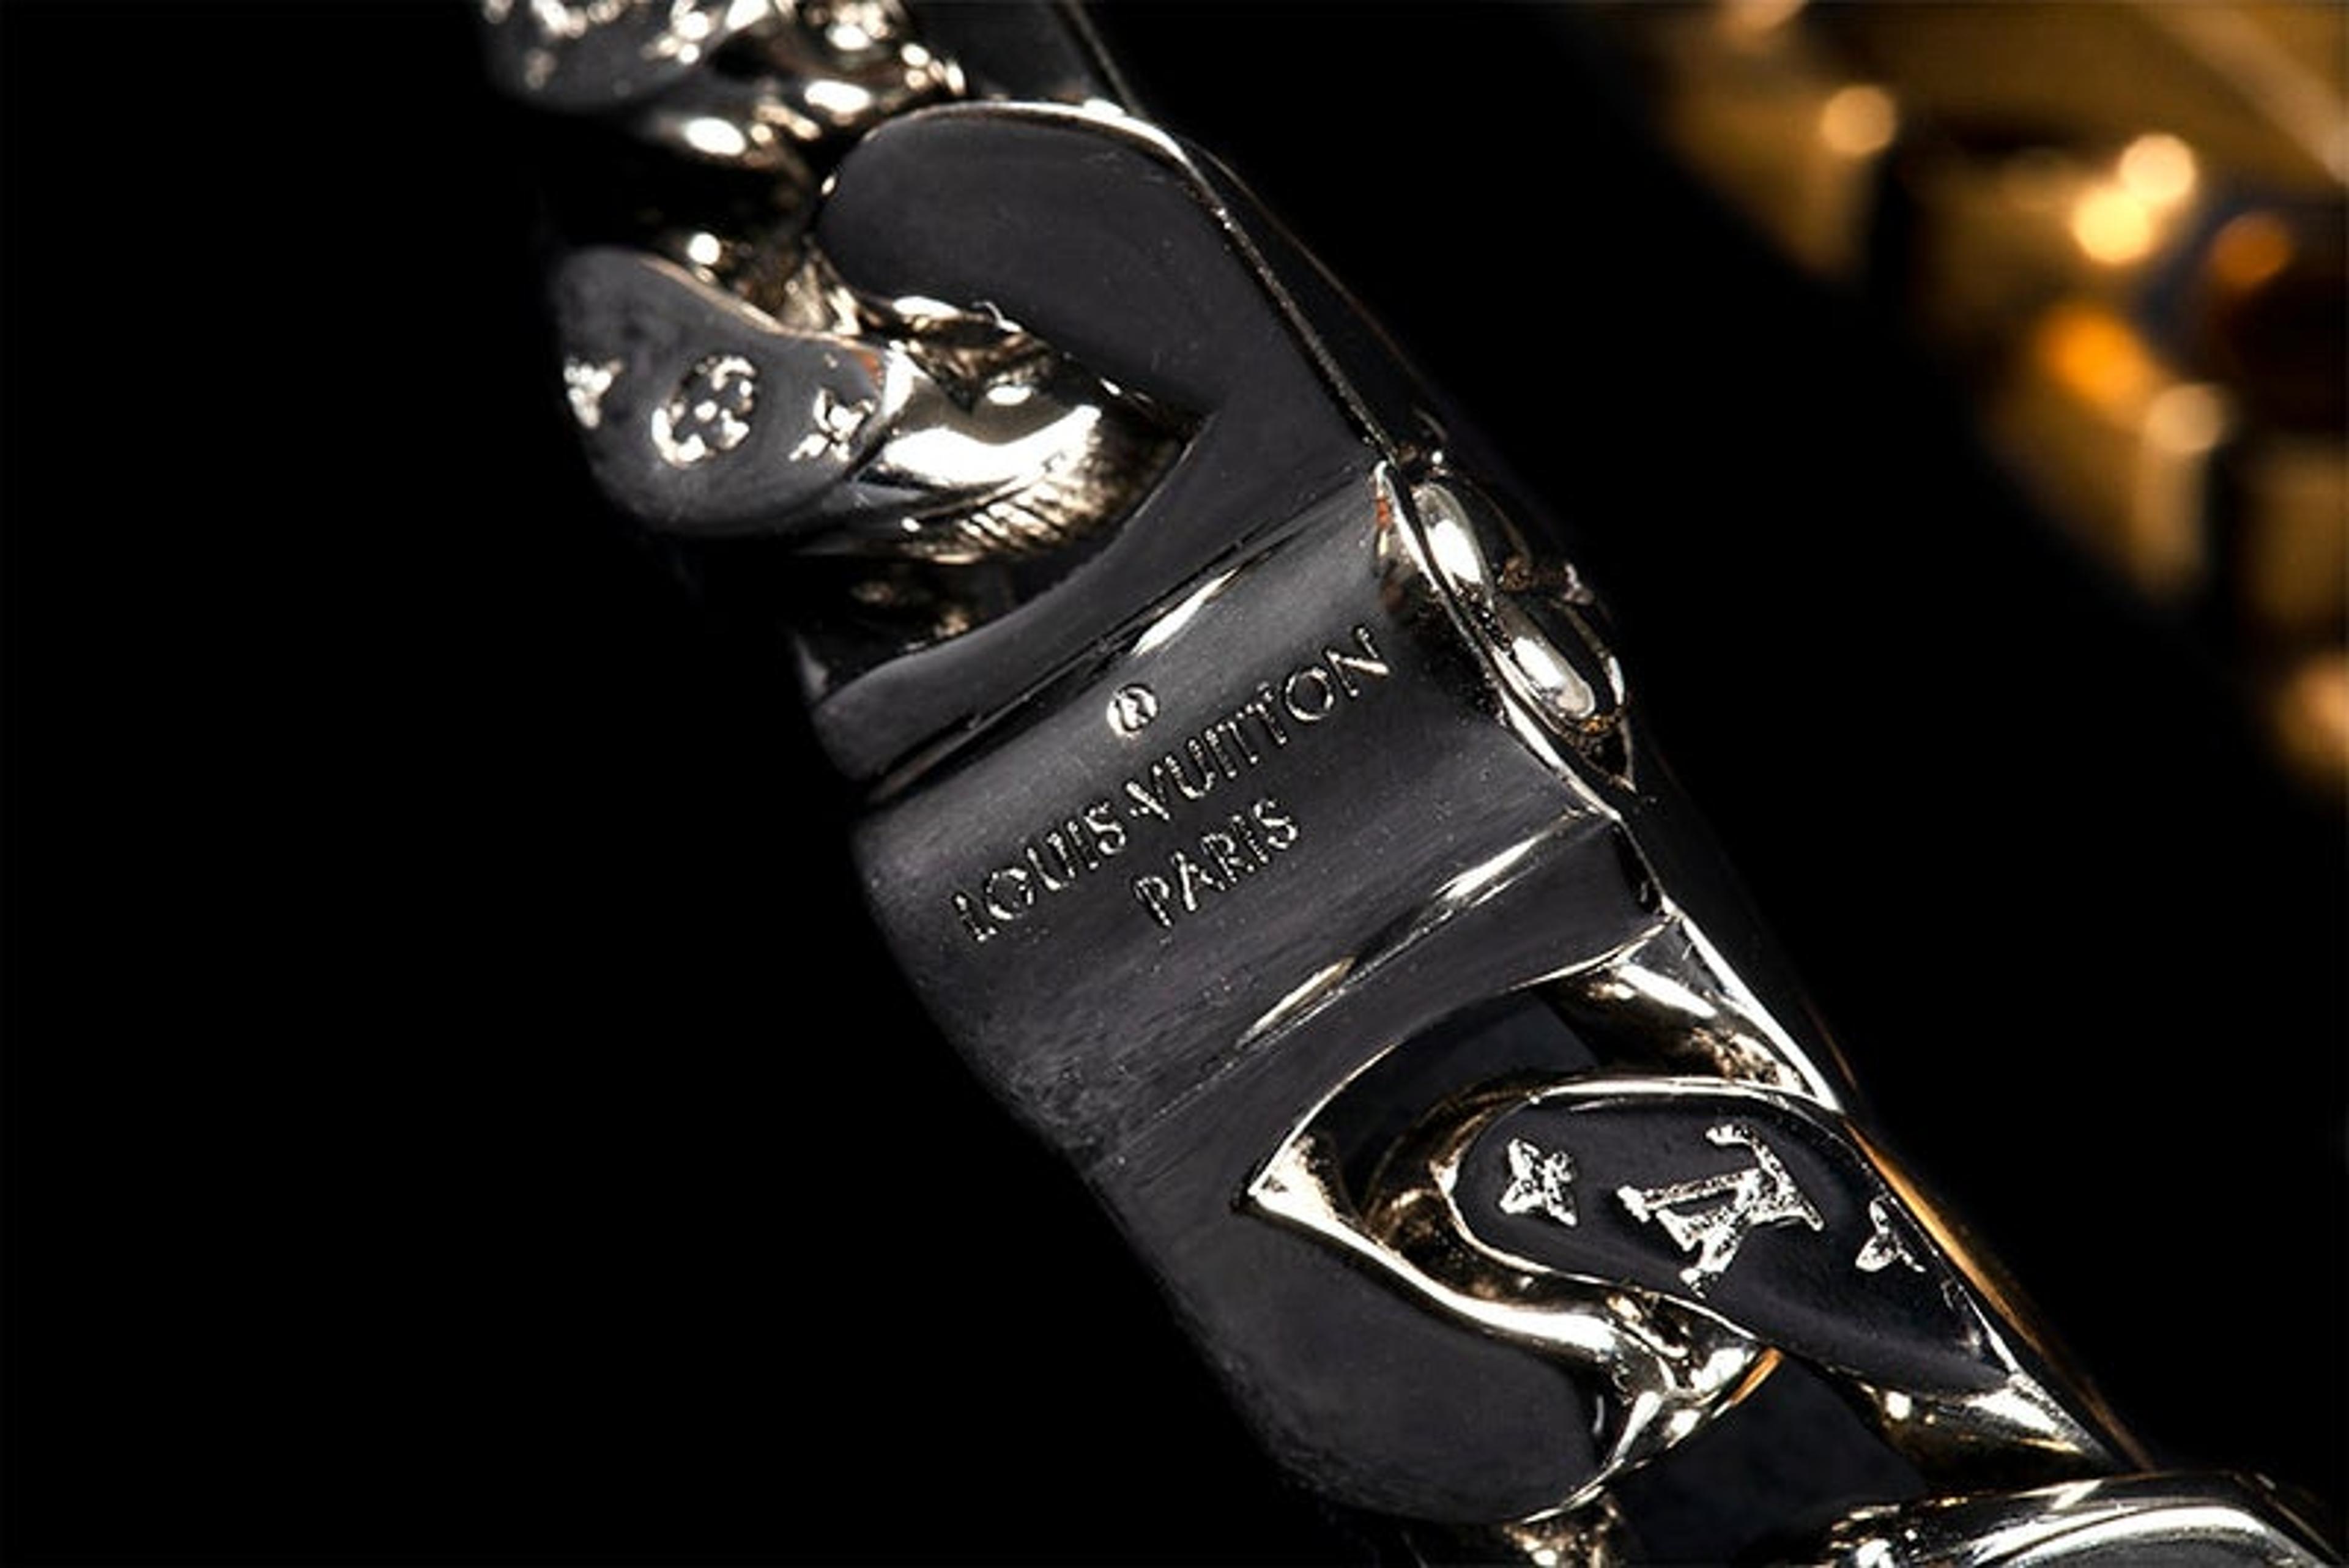 Louis Vuitton Soapy Chain Necklace